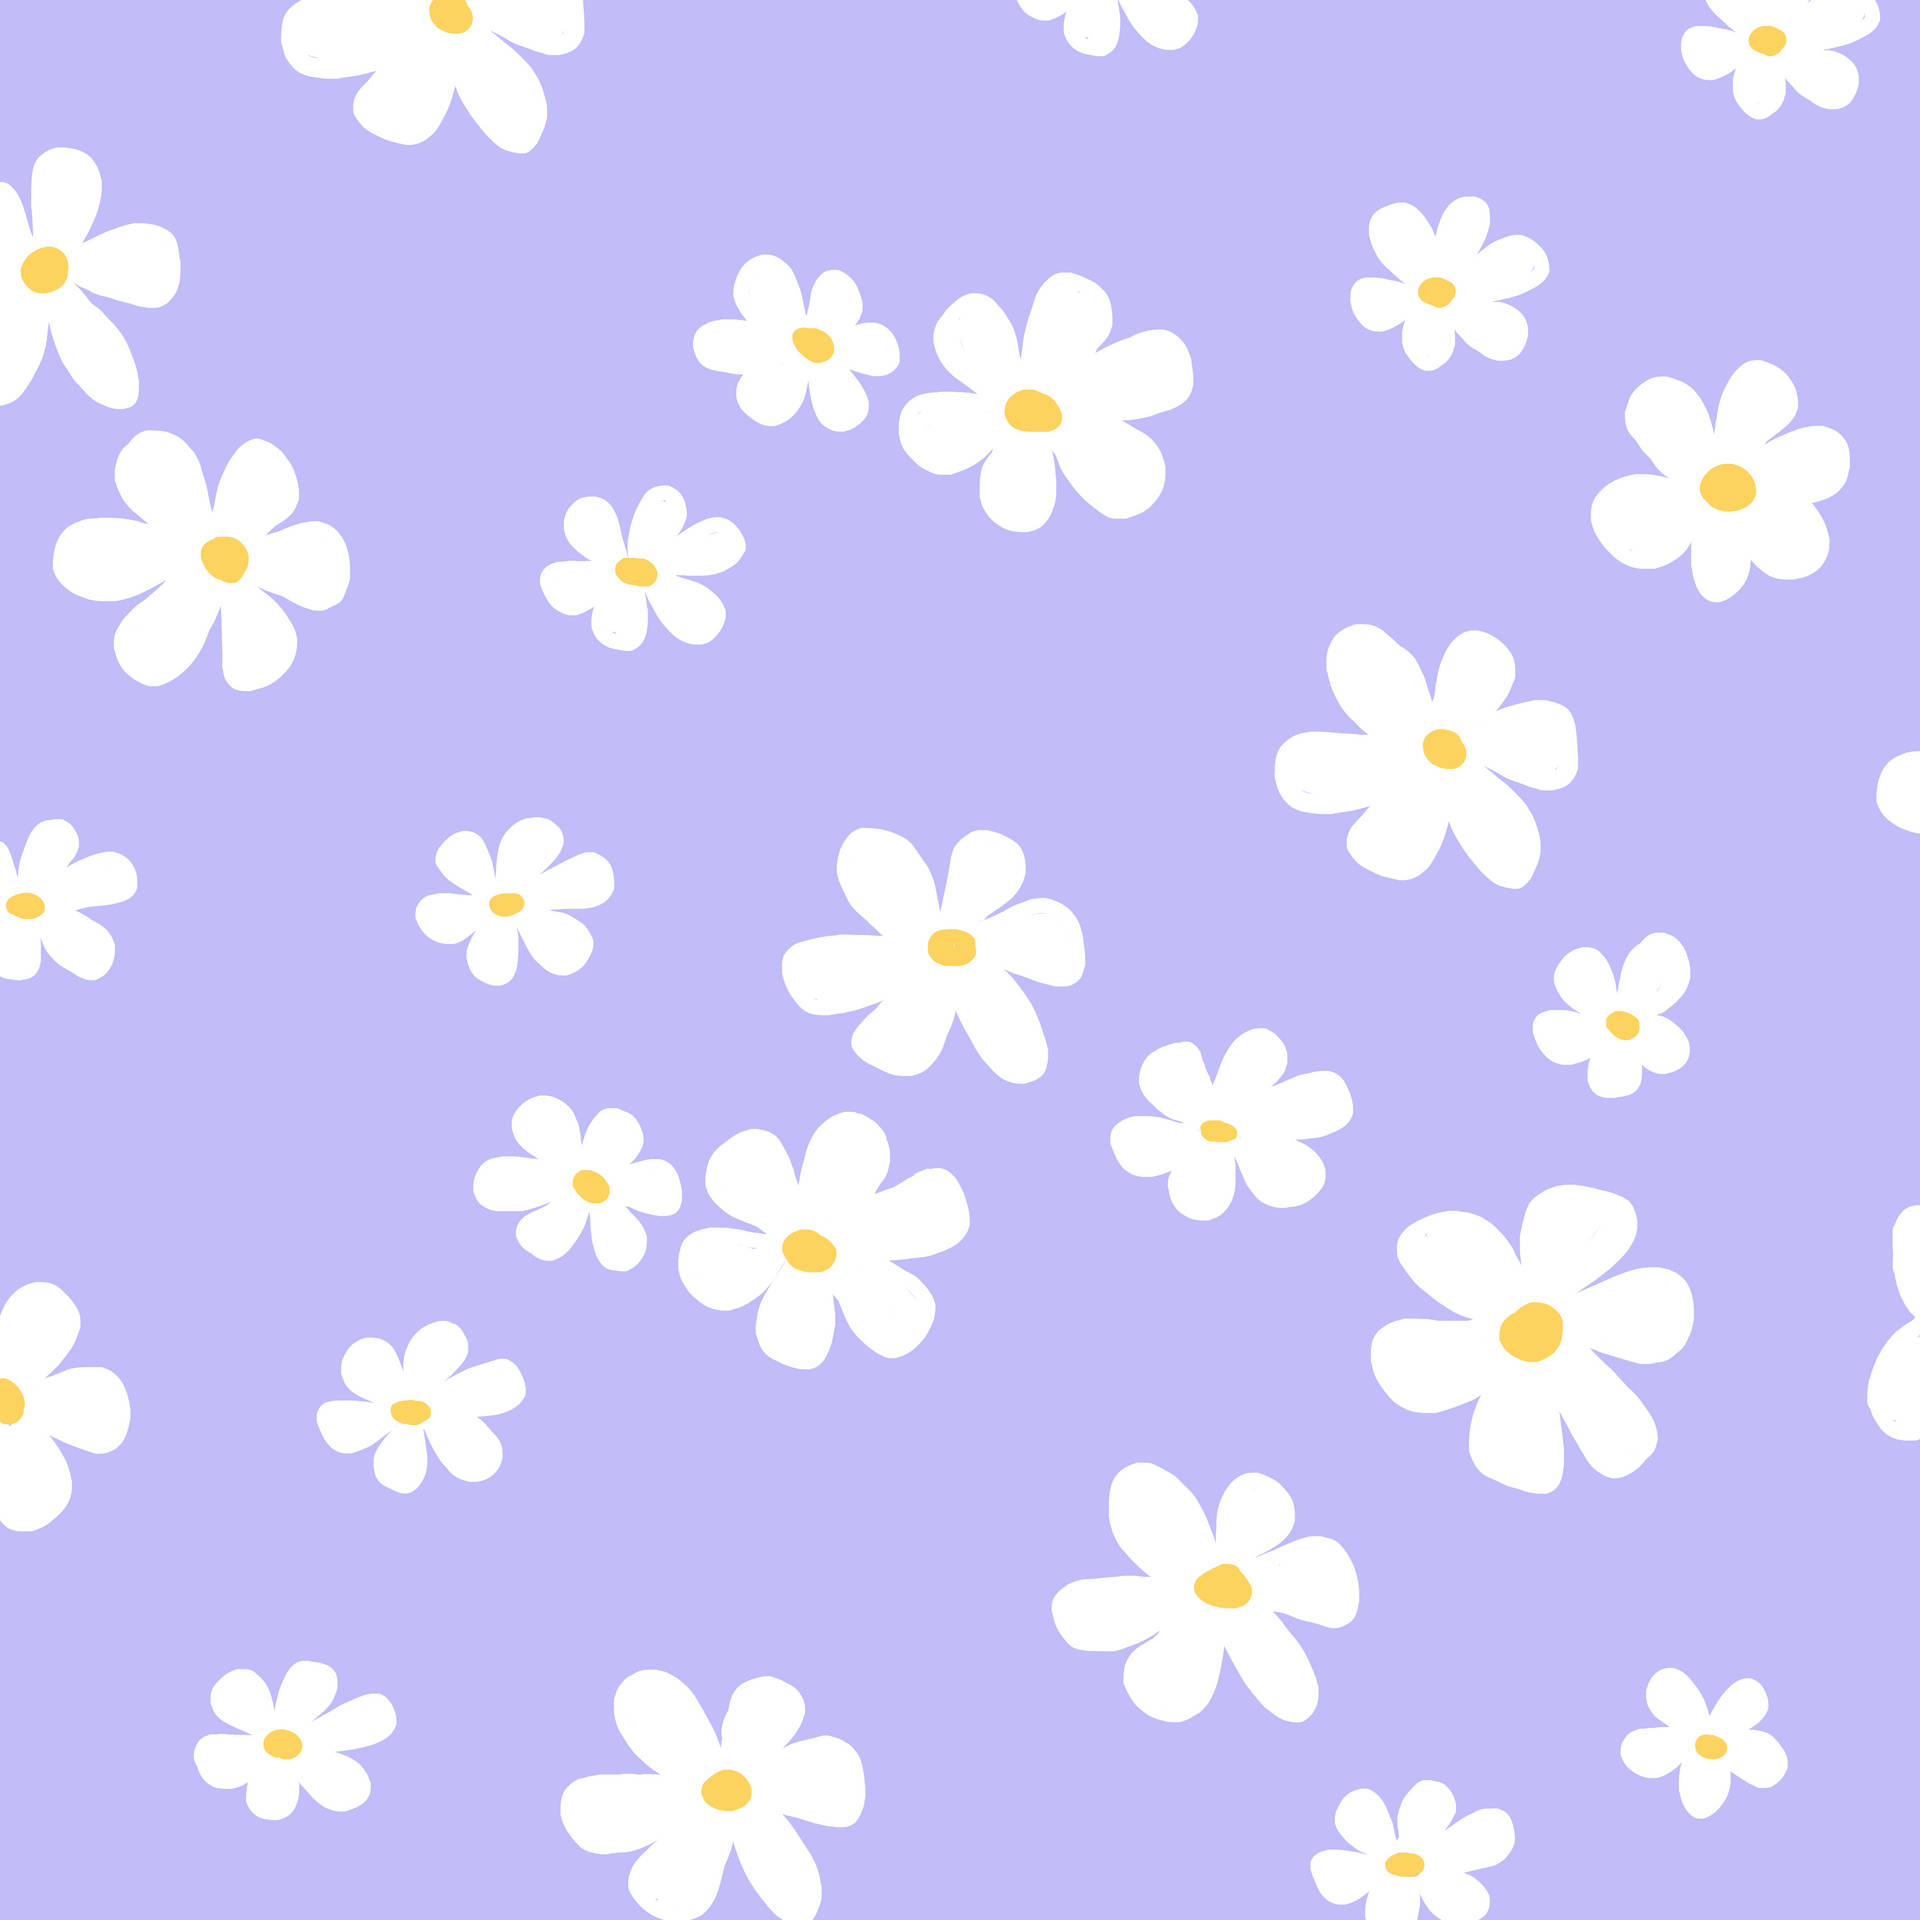 43+] Purple and White Wallpaper - WallpaperSafari